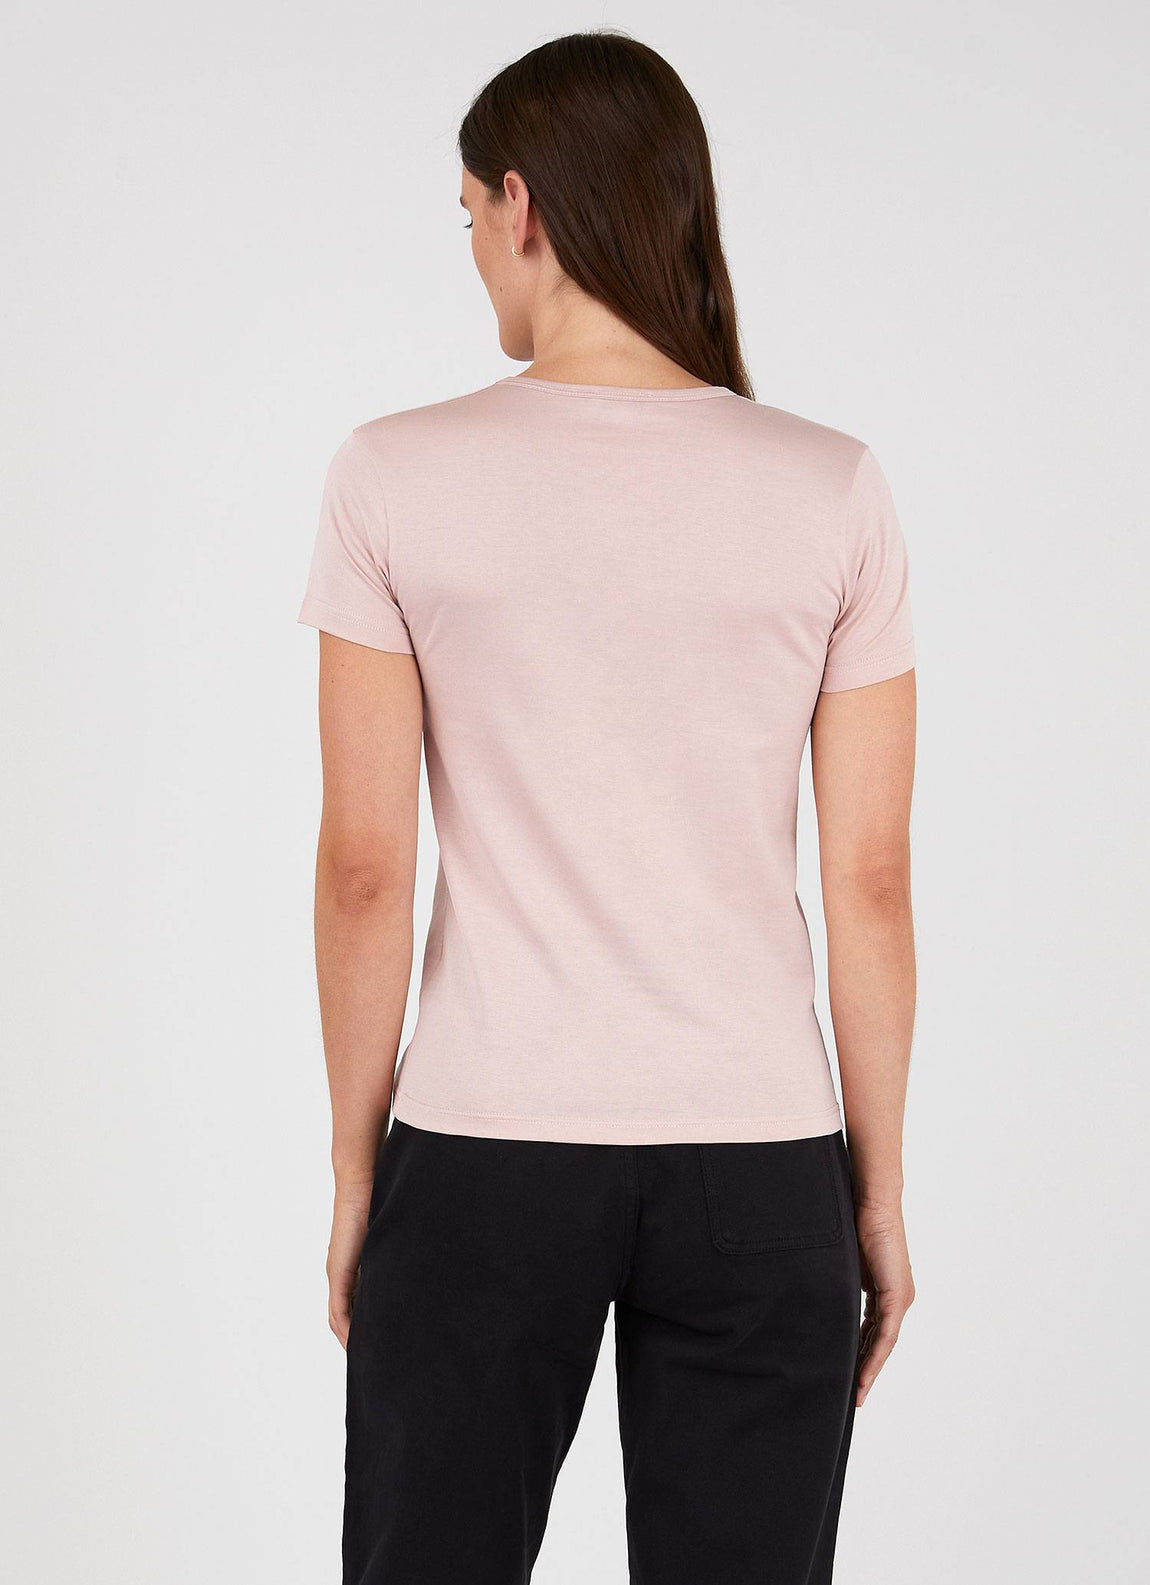 Women's Classic T-shirt in Shell Pink